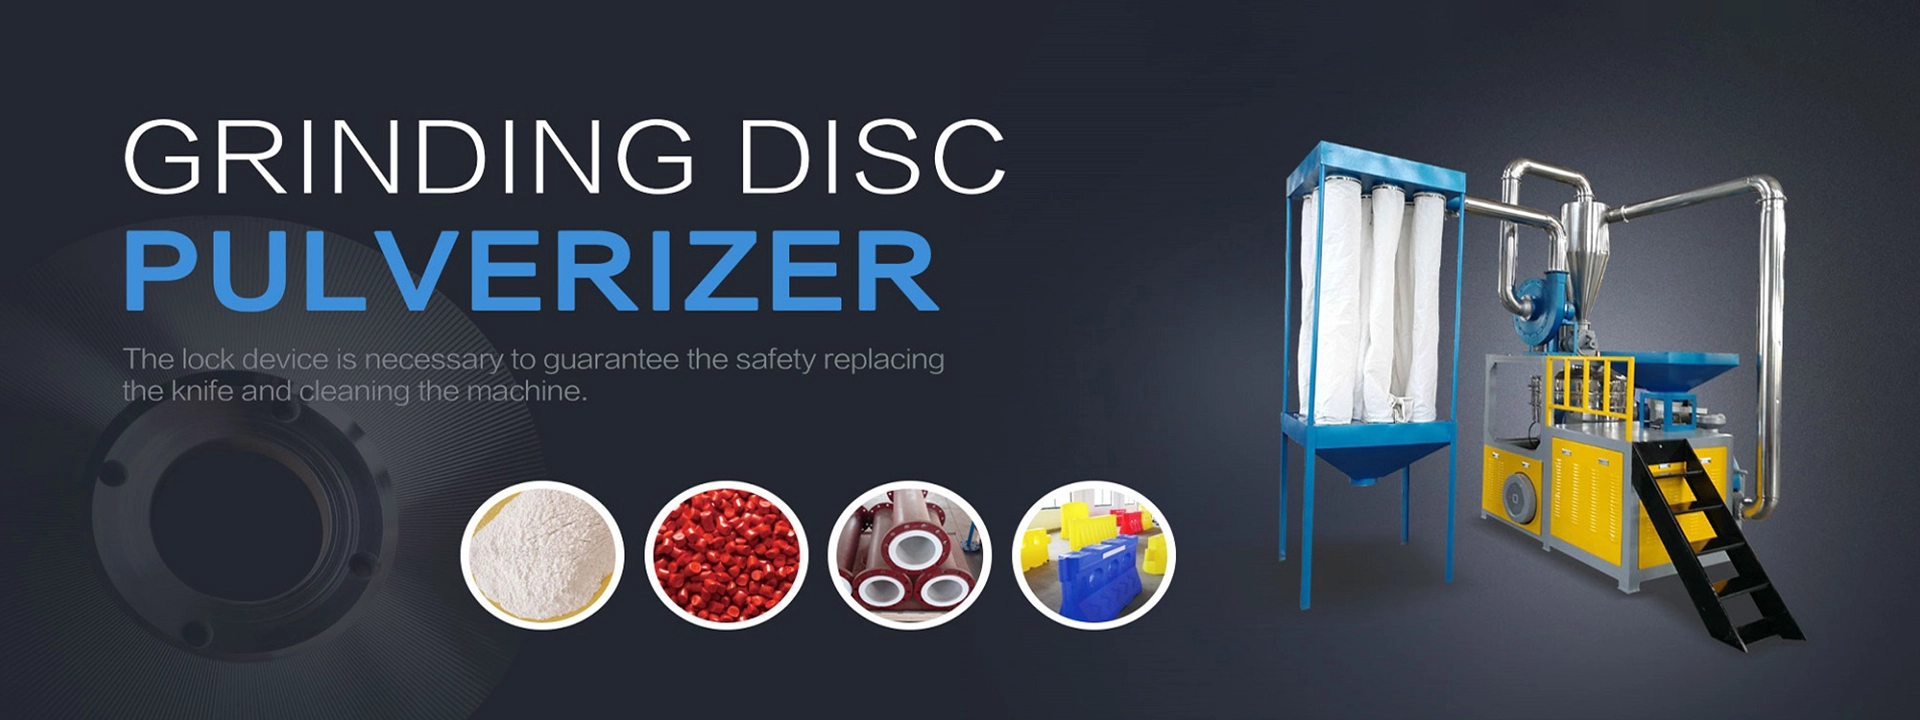 Grinding Disc Pulverizer